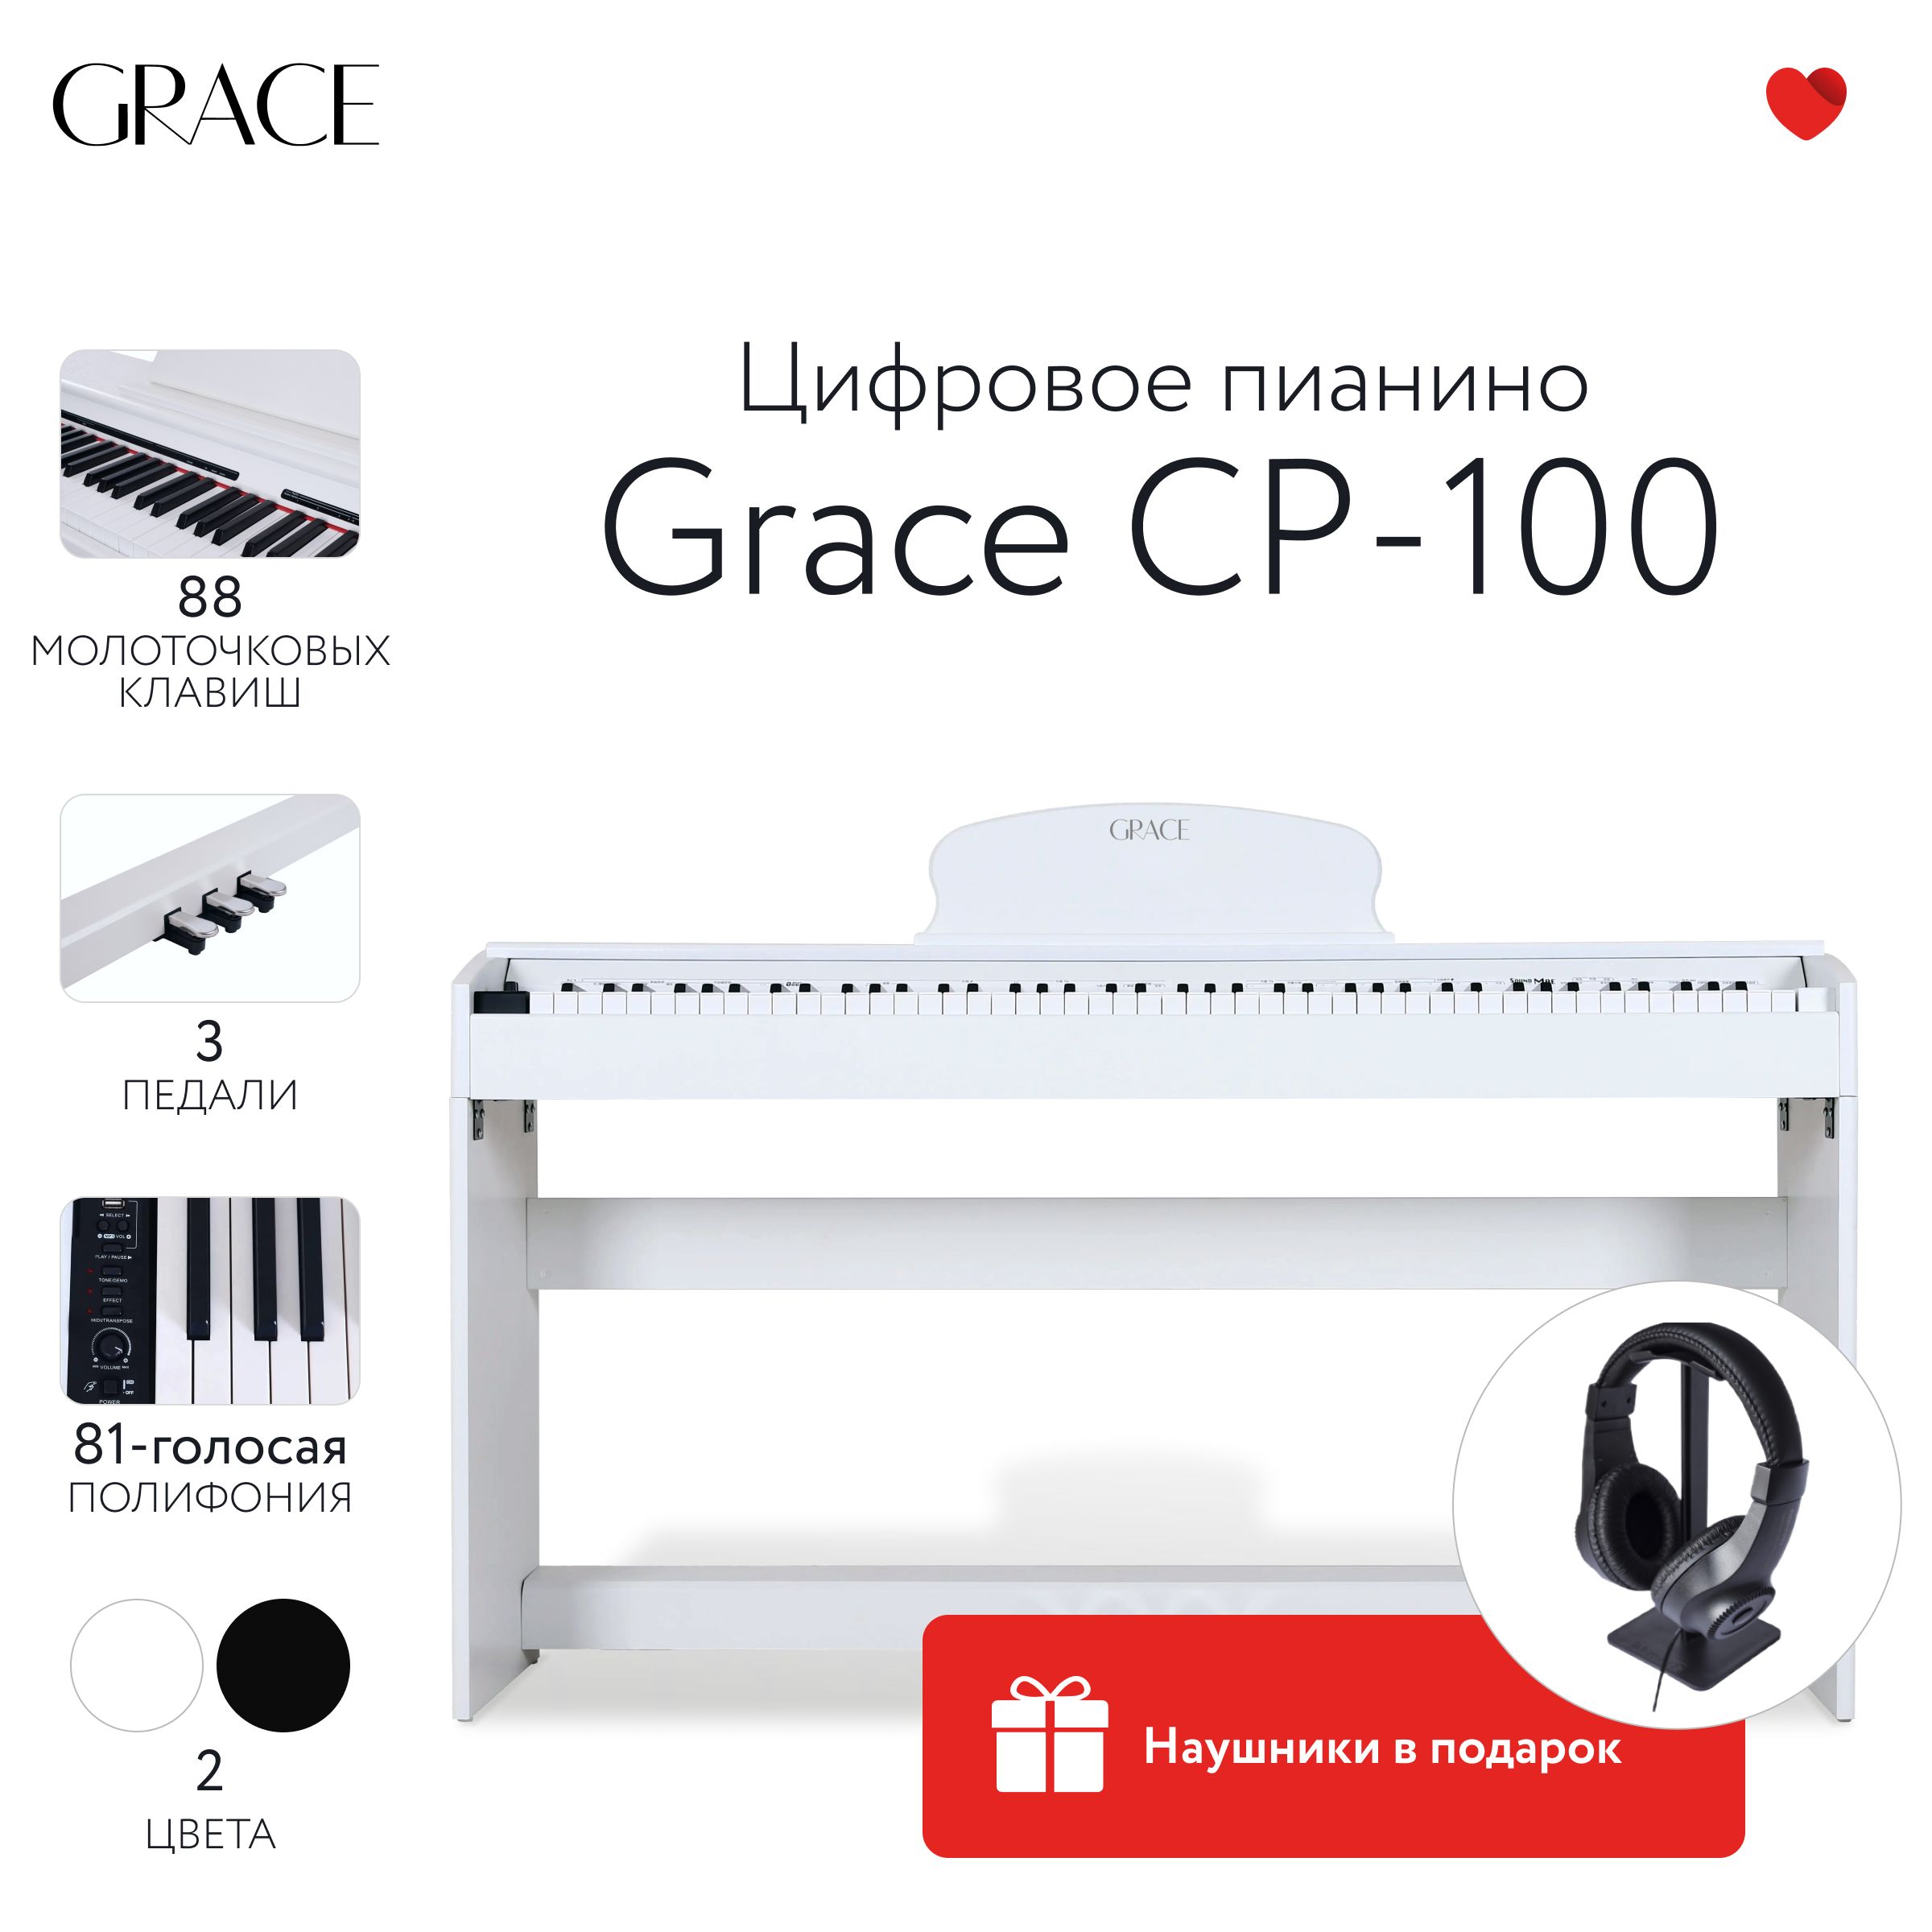 GraceCP-100WH-Цифровоепианиновкорпусестремяпедалями,наушникивподарок